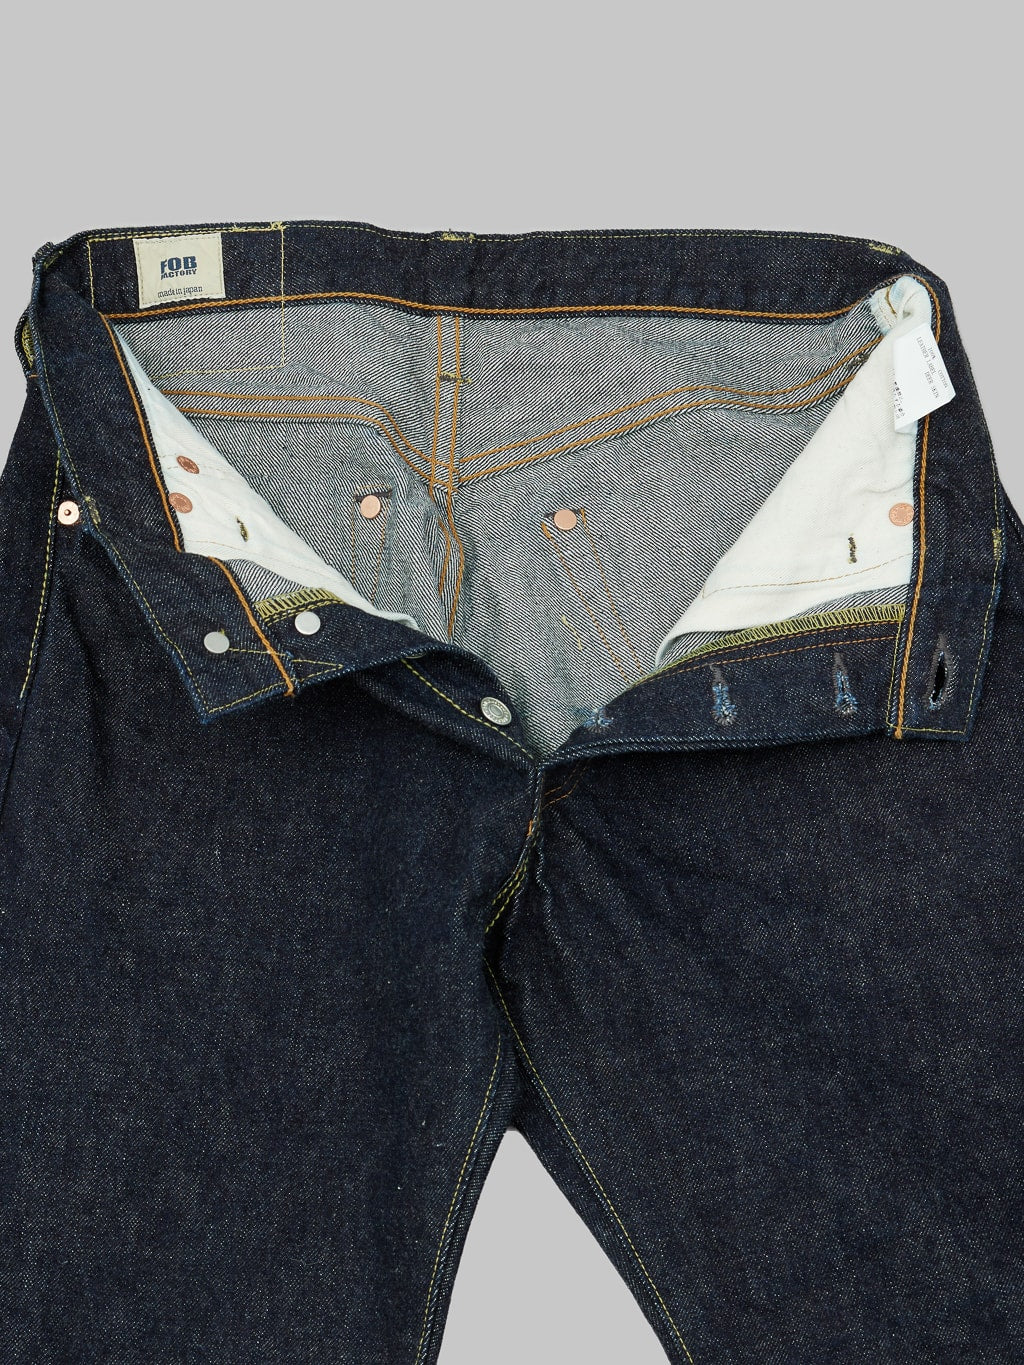 Fob factory slim straight denim jeans weft interior